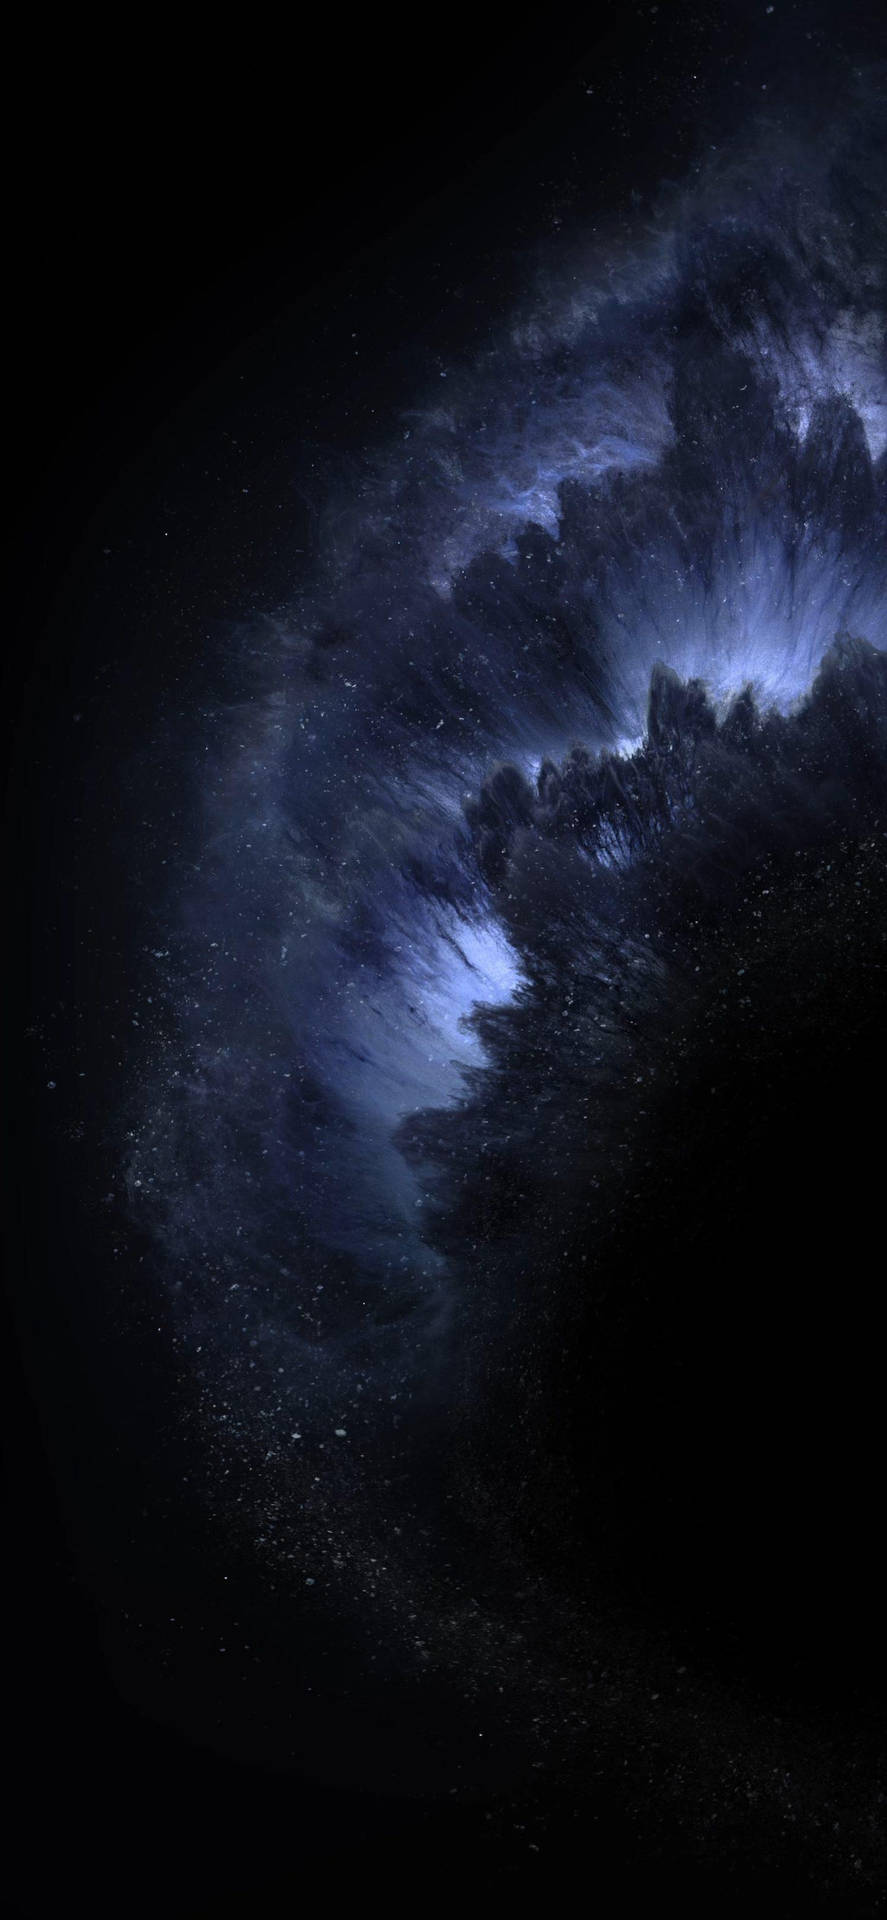 Galáxiaabismo Em Modo Escuro. Papel de Parede